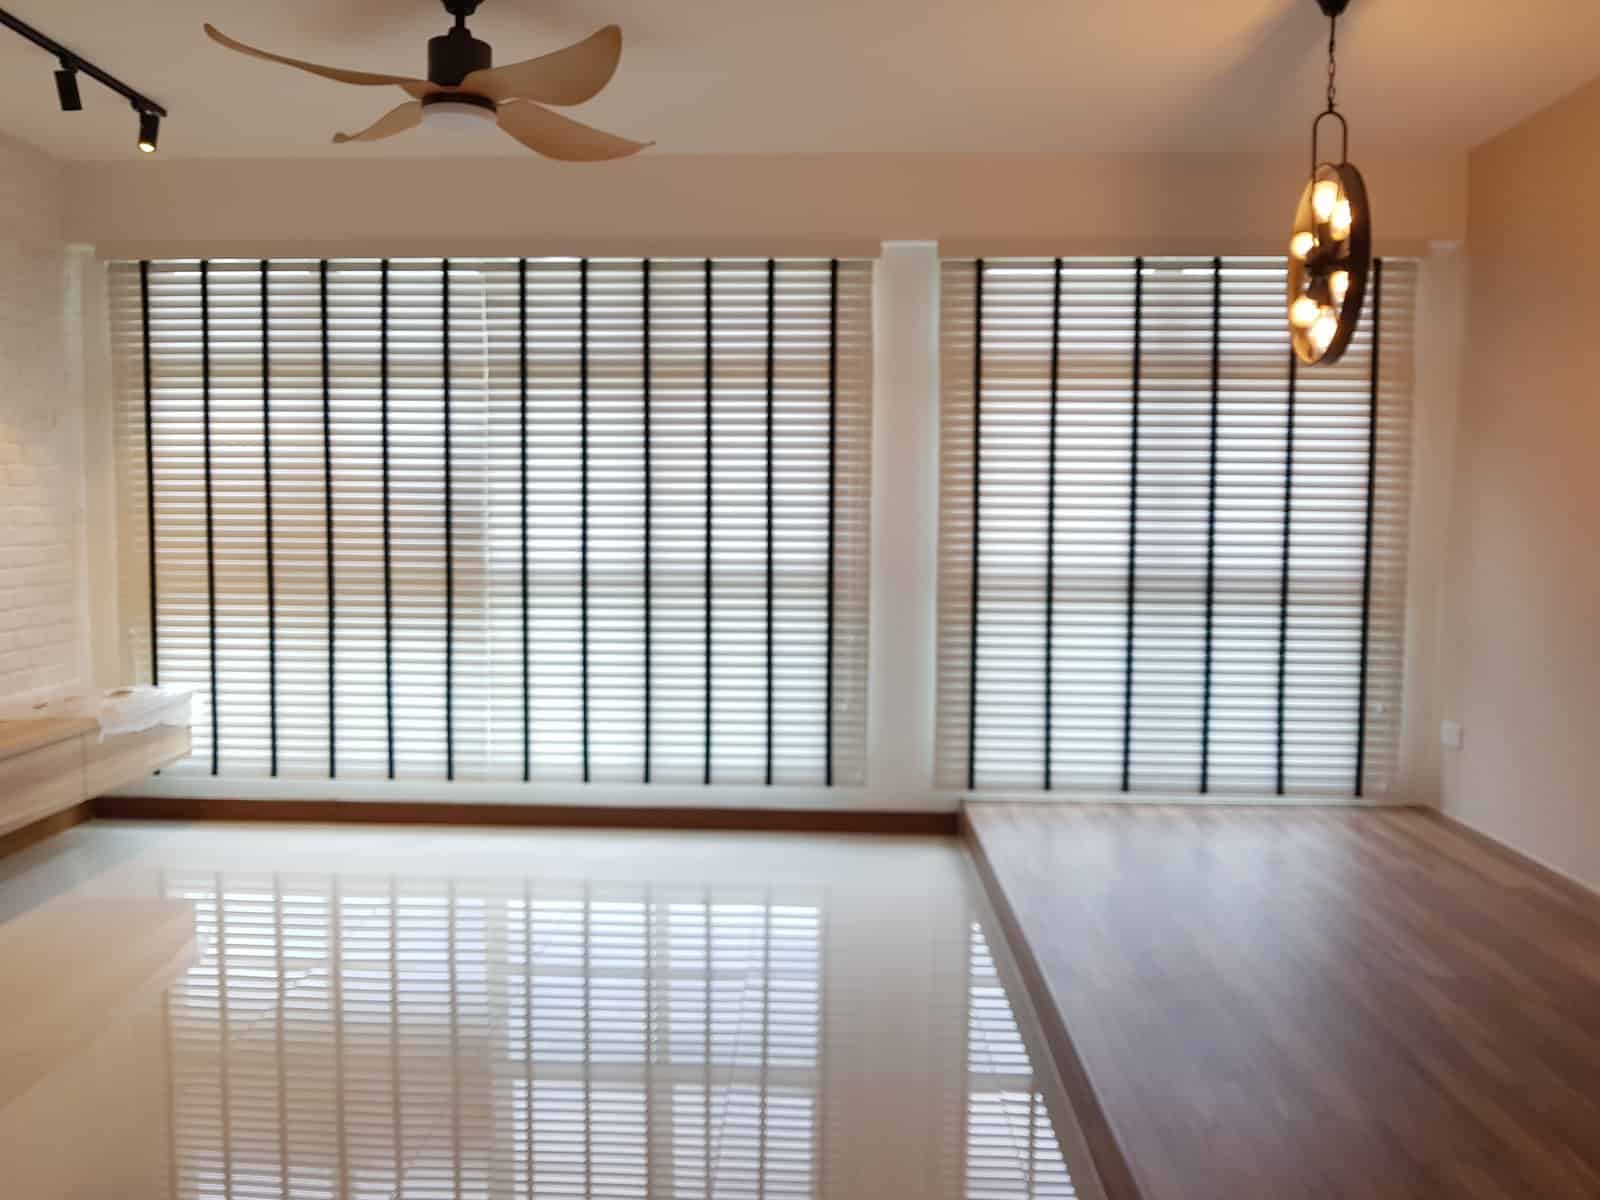 Living room venetian blinds with minimalist interior design.